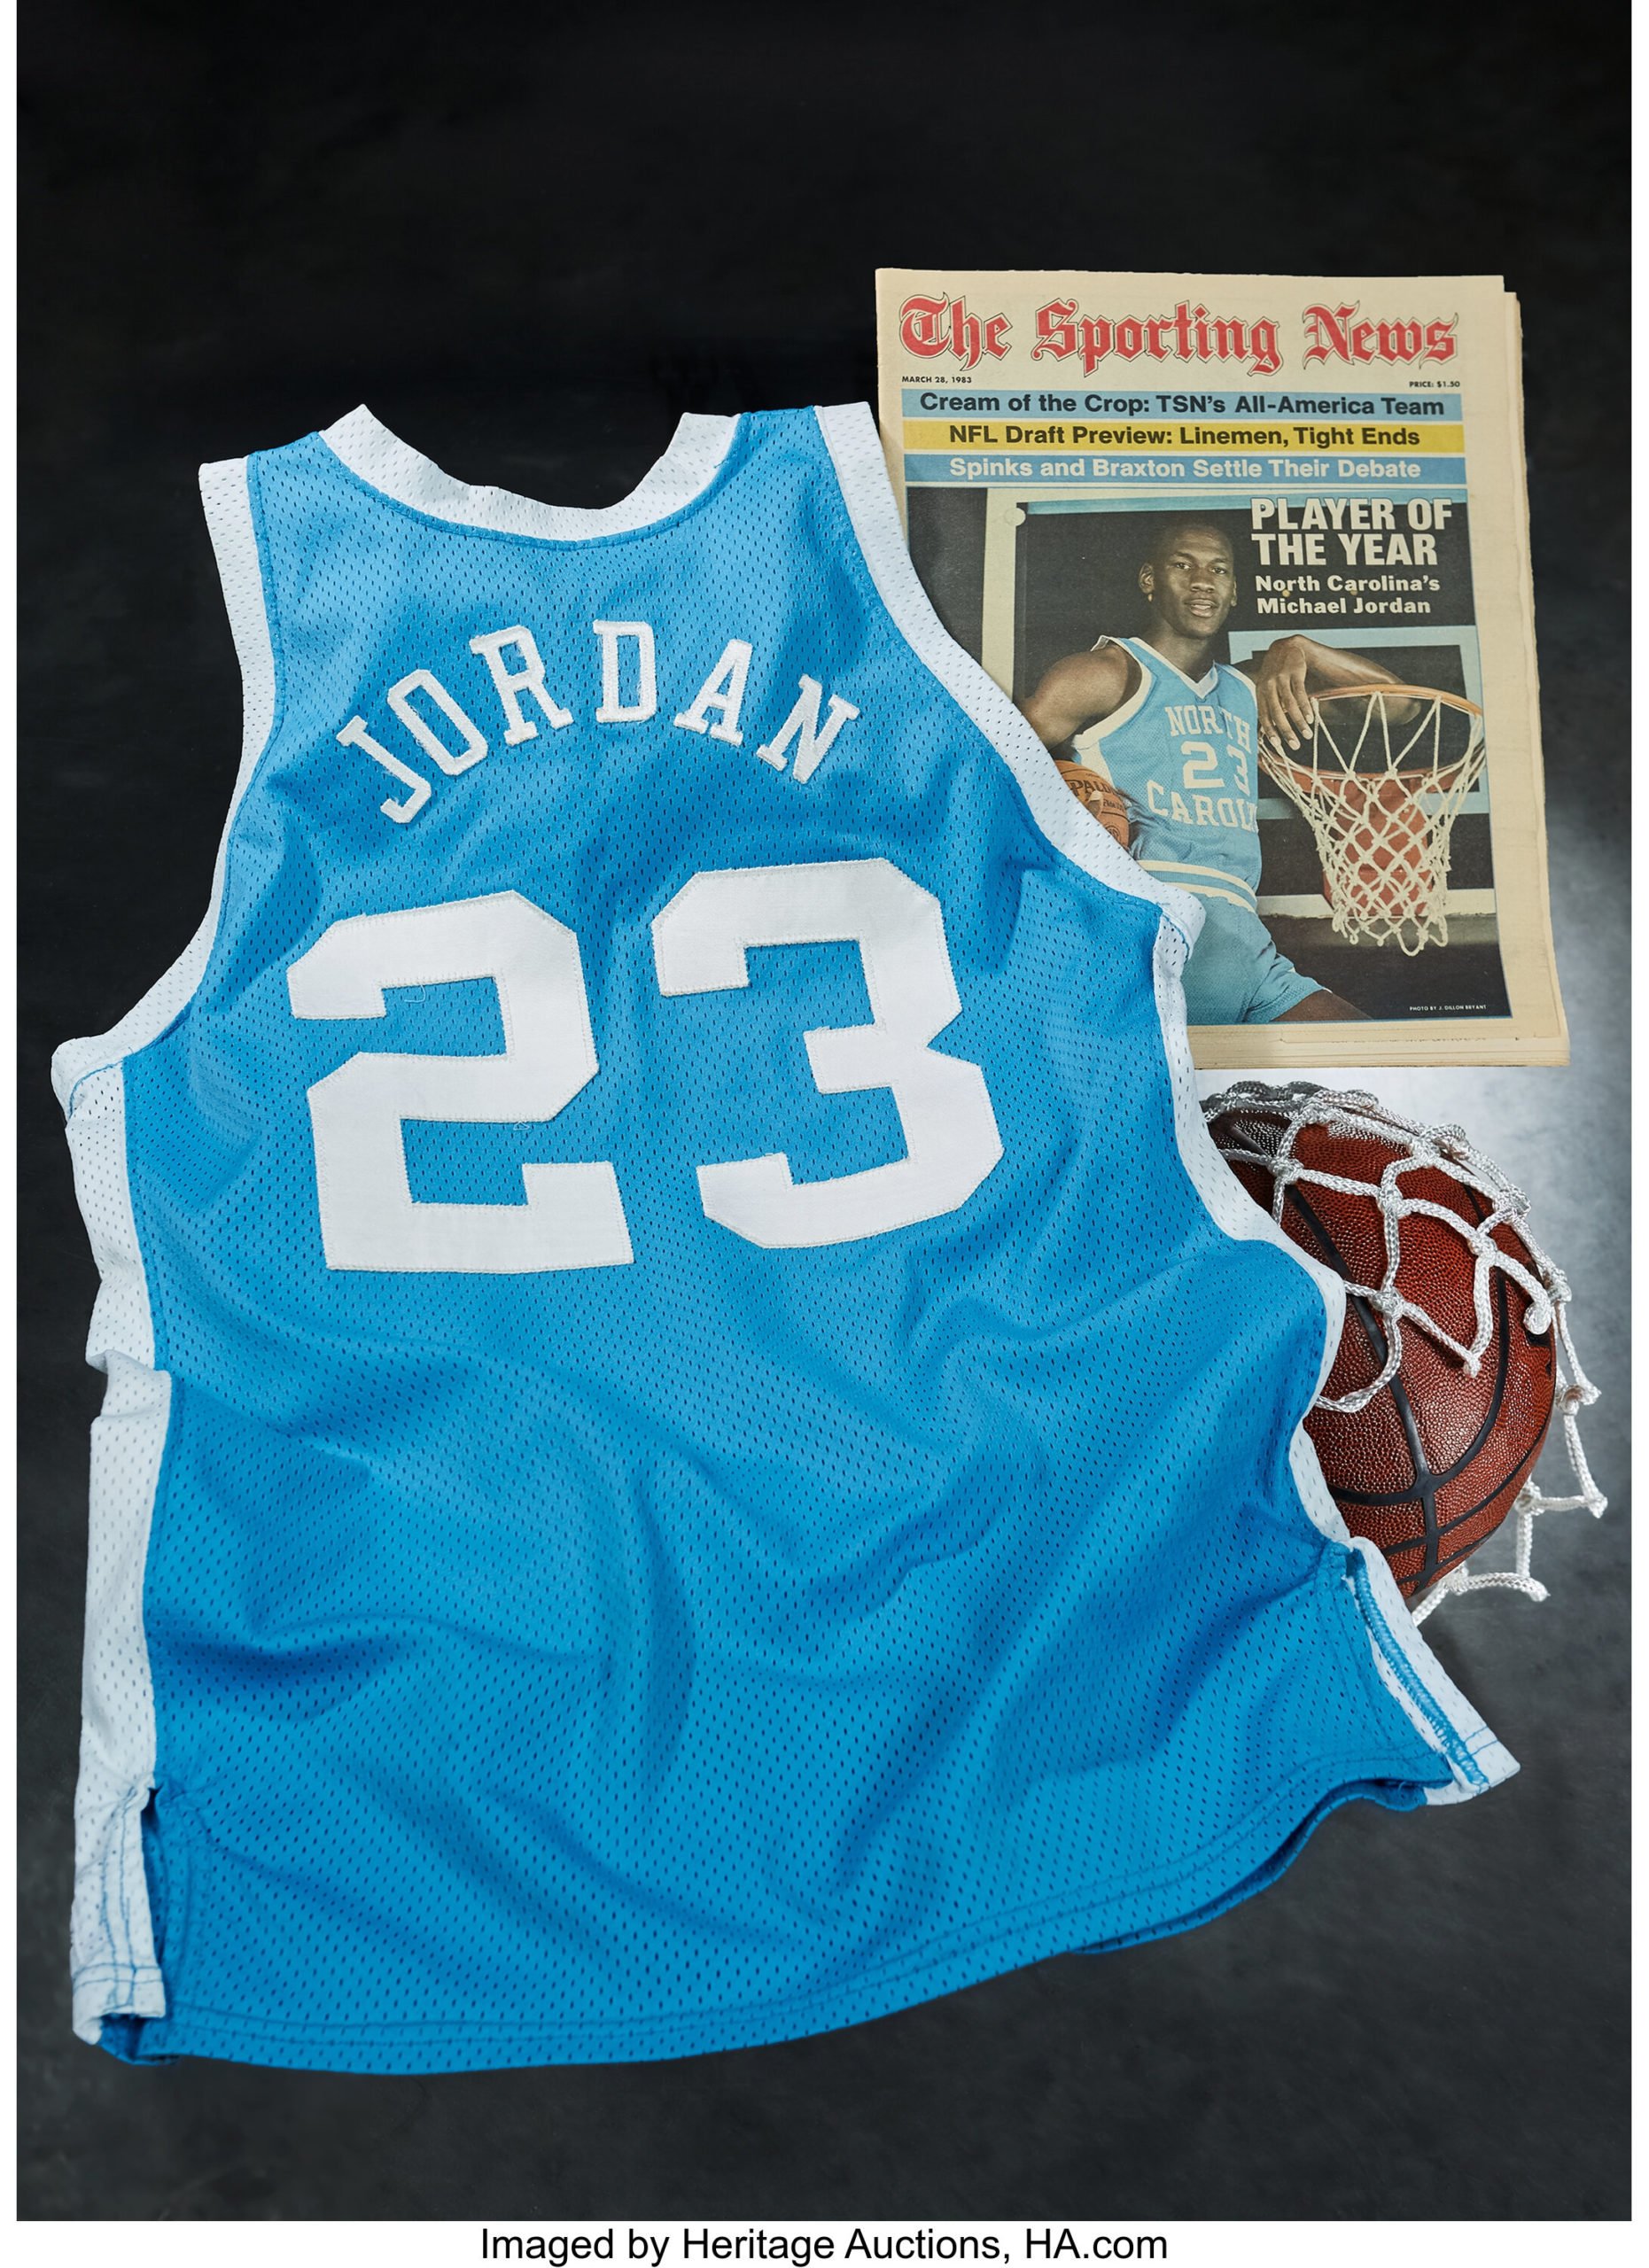 Georgetown Hoyas Carrier Classic Uniforms by Jordan Brand - Air Jordans,  Release Dates & More